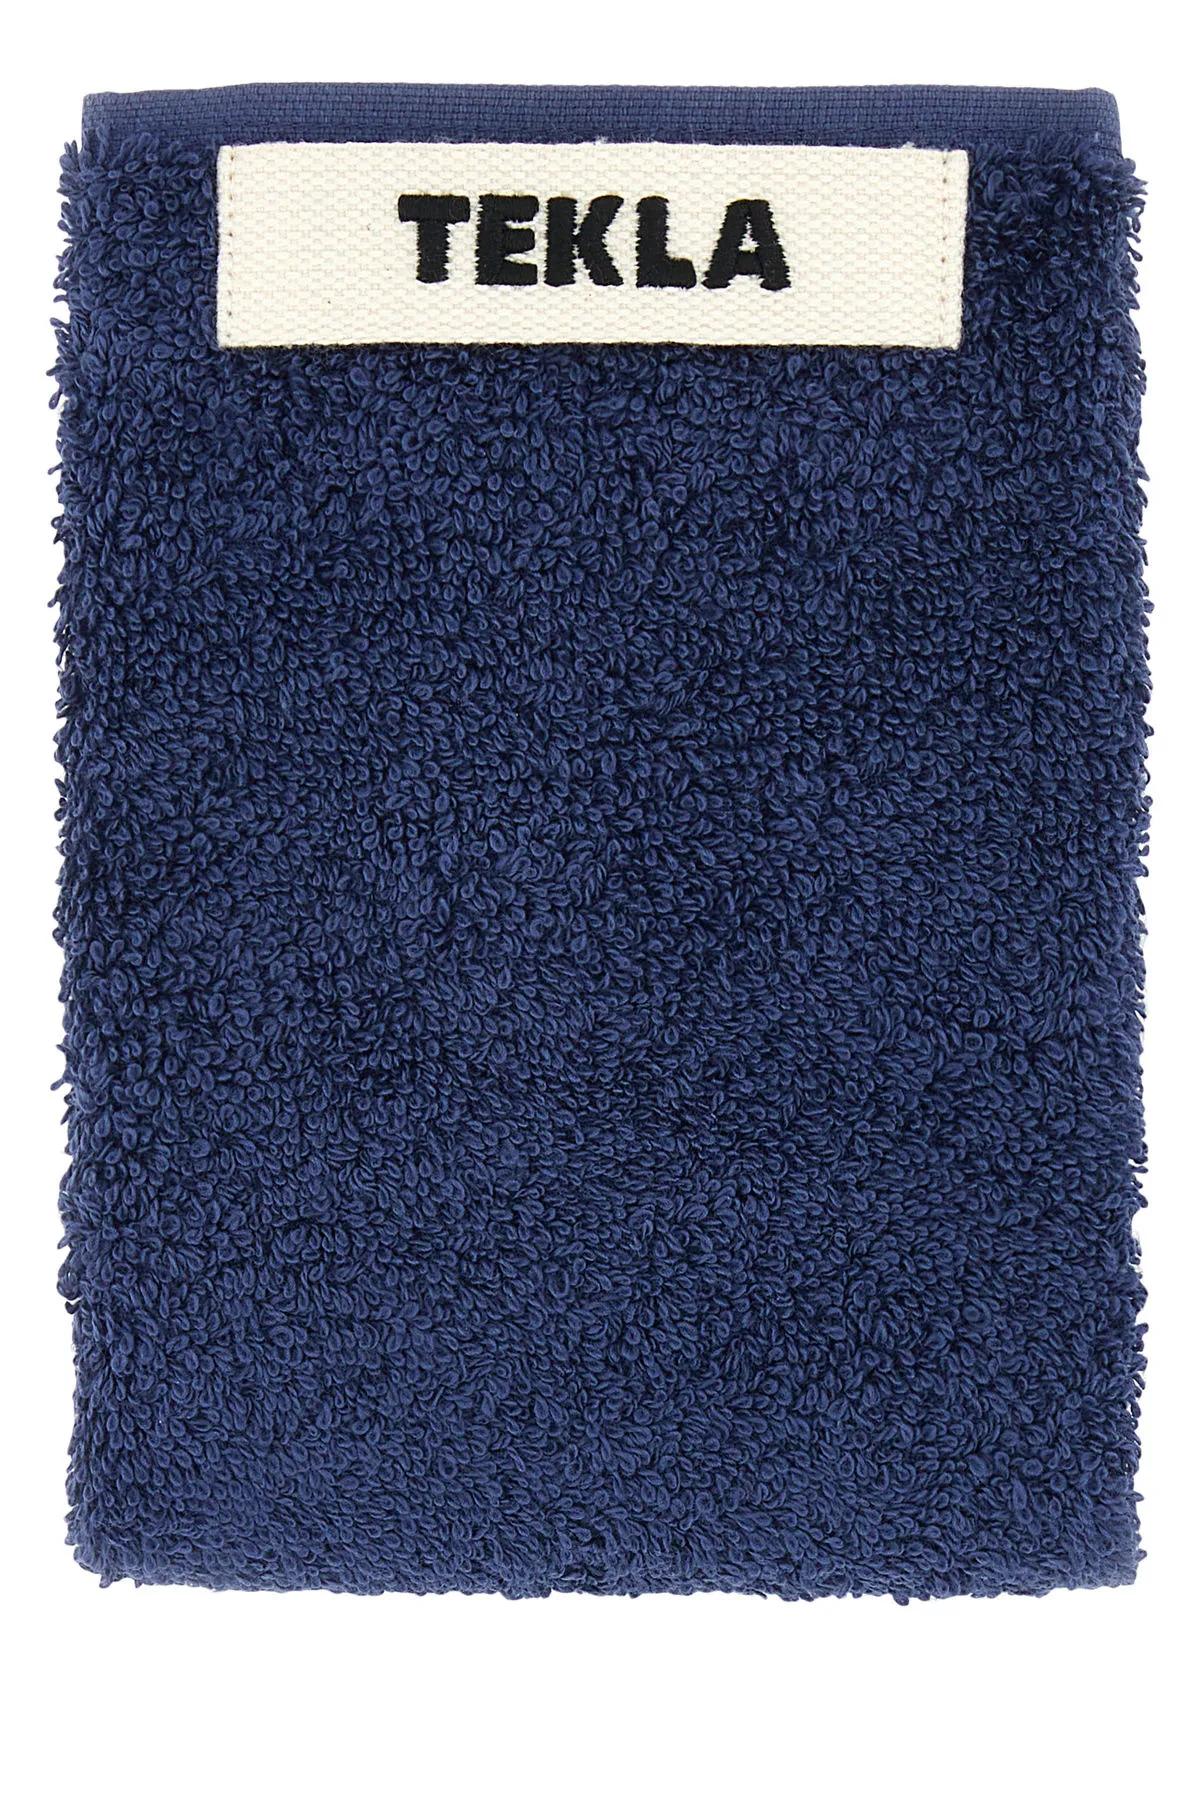 Tekla Air Force Blue Terry Towel